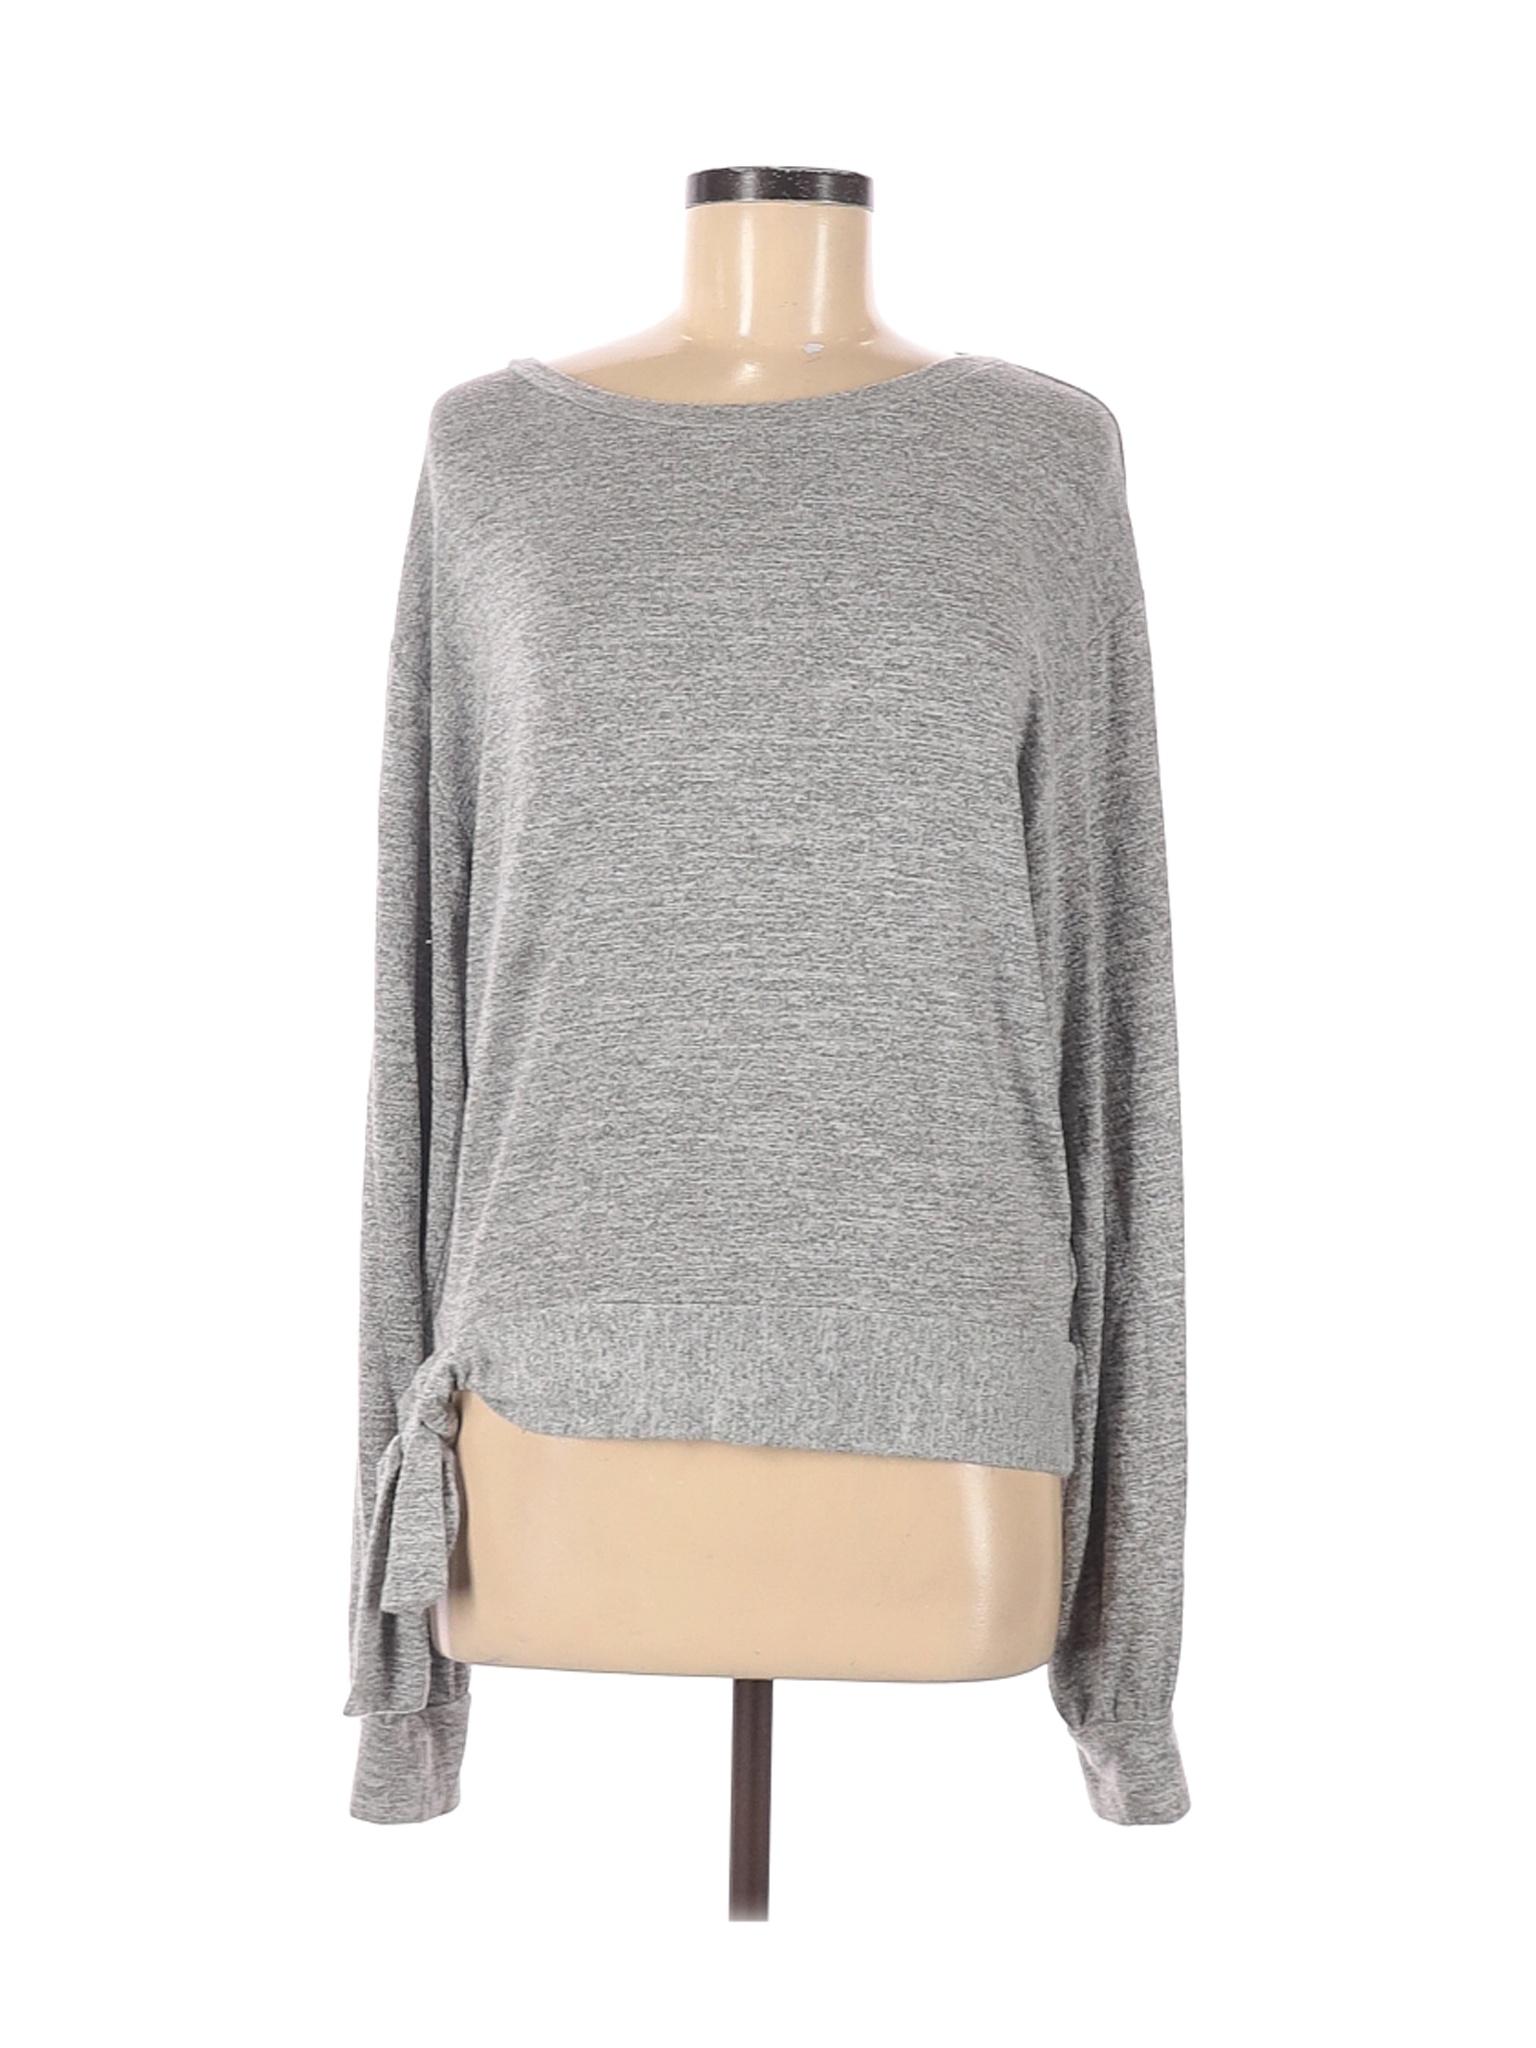 Gap Women Gray Long Sleeve Top M | eBay